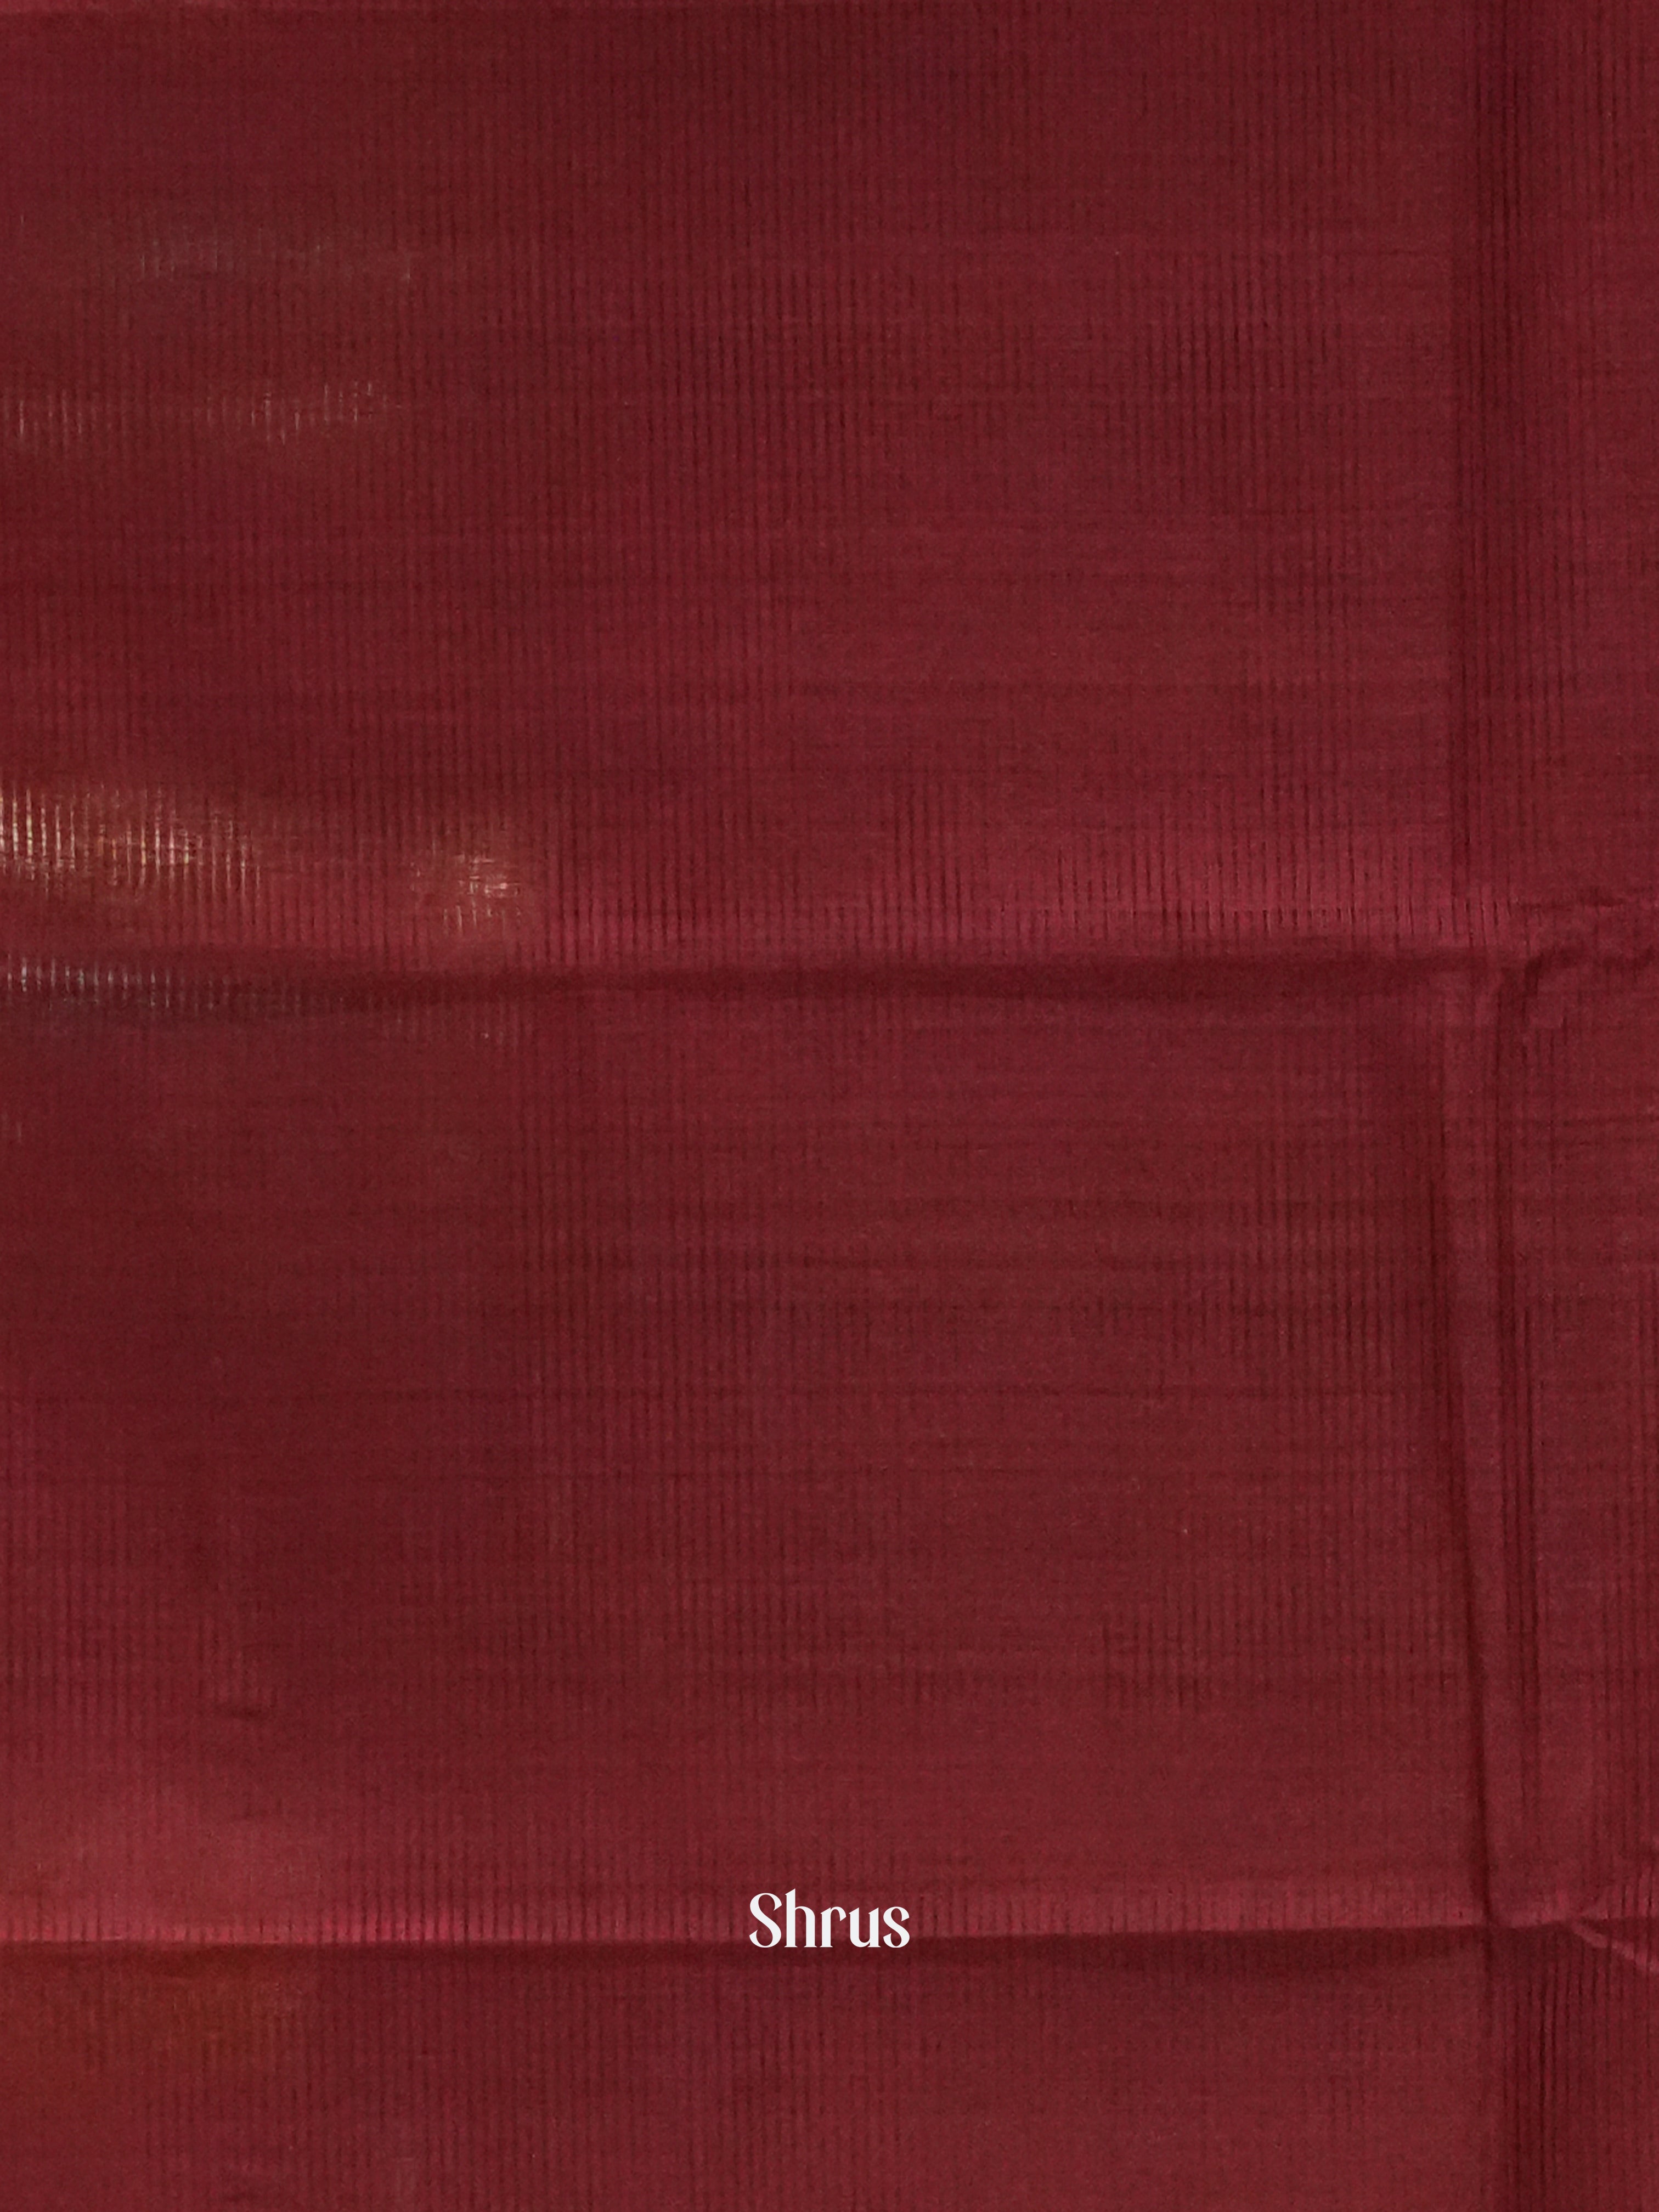 Maroon(Single Tone)- Mangalagiri Silk Cotton saree